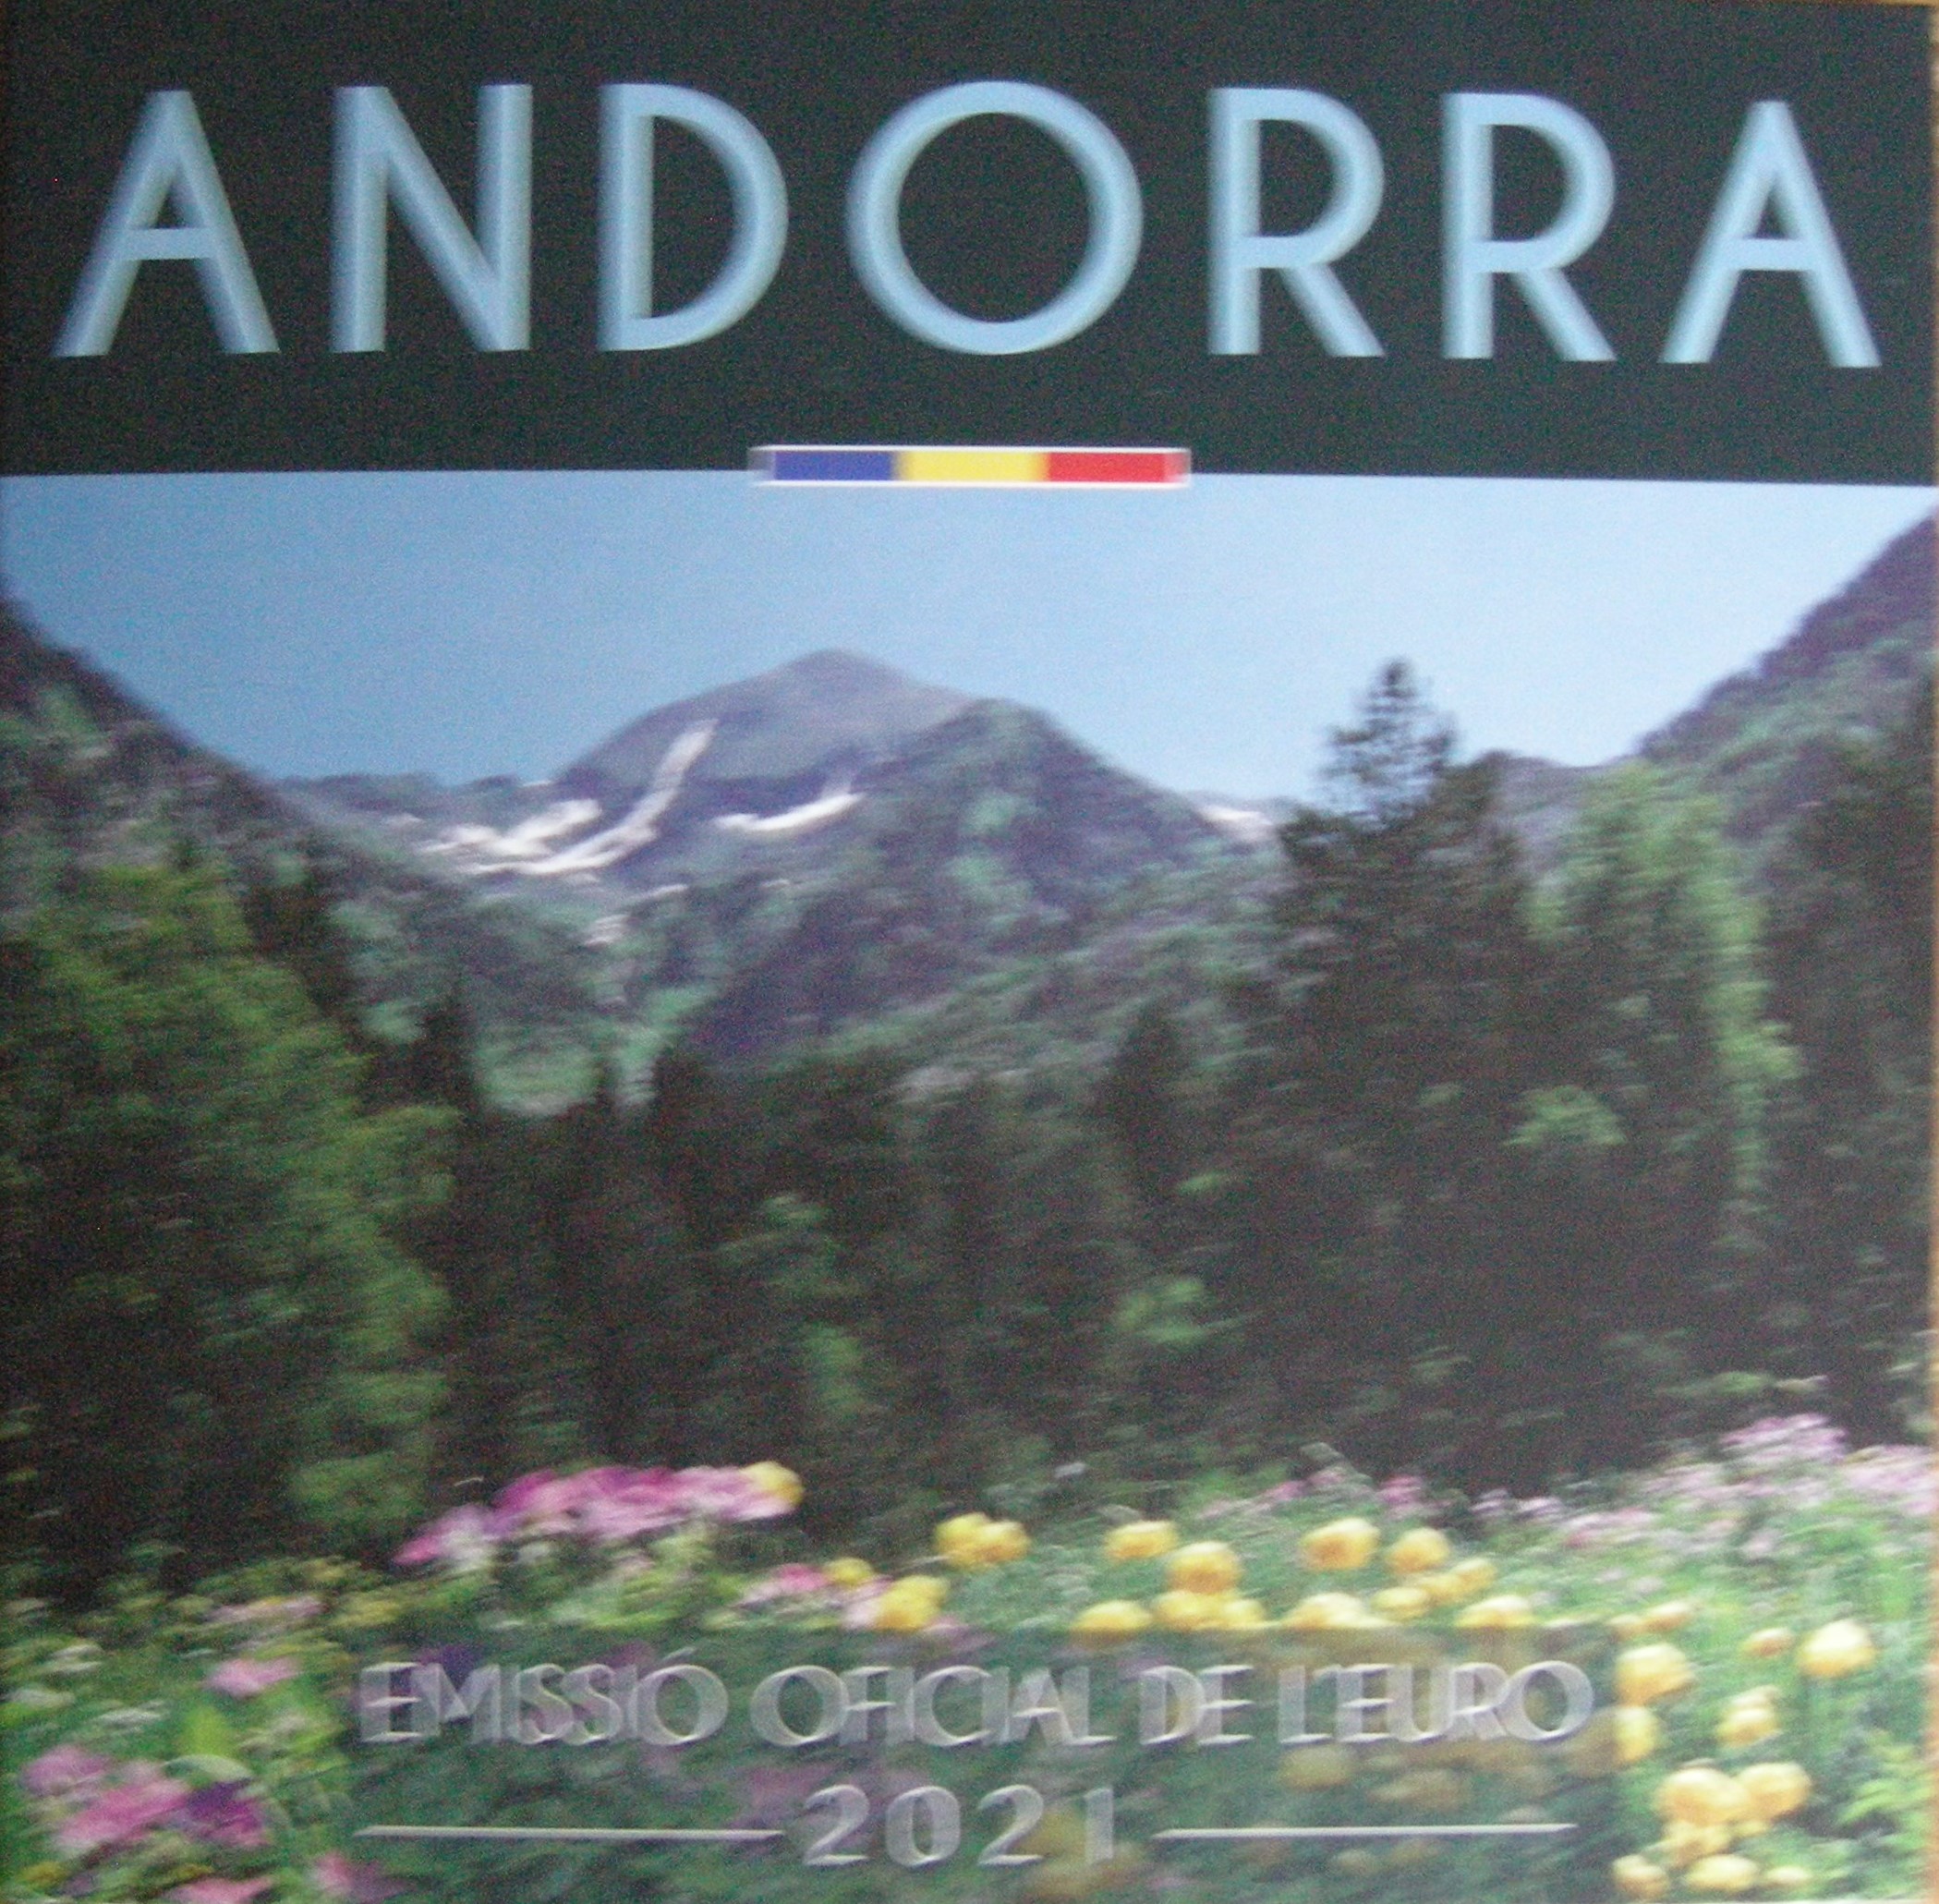 Andorra BU set 2021